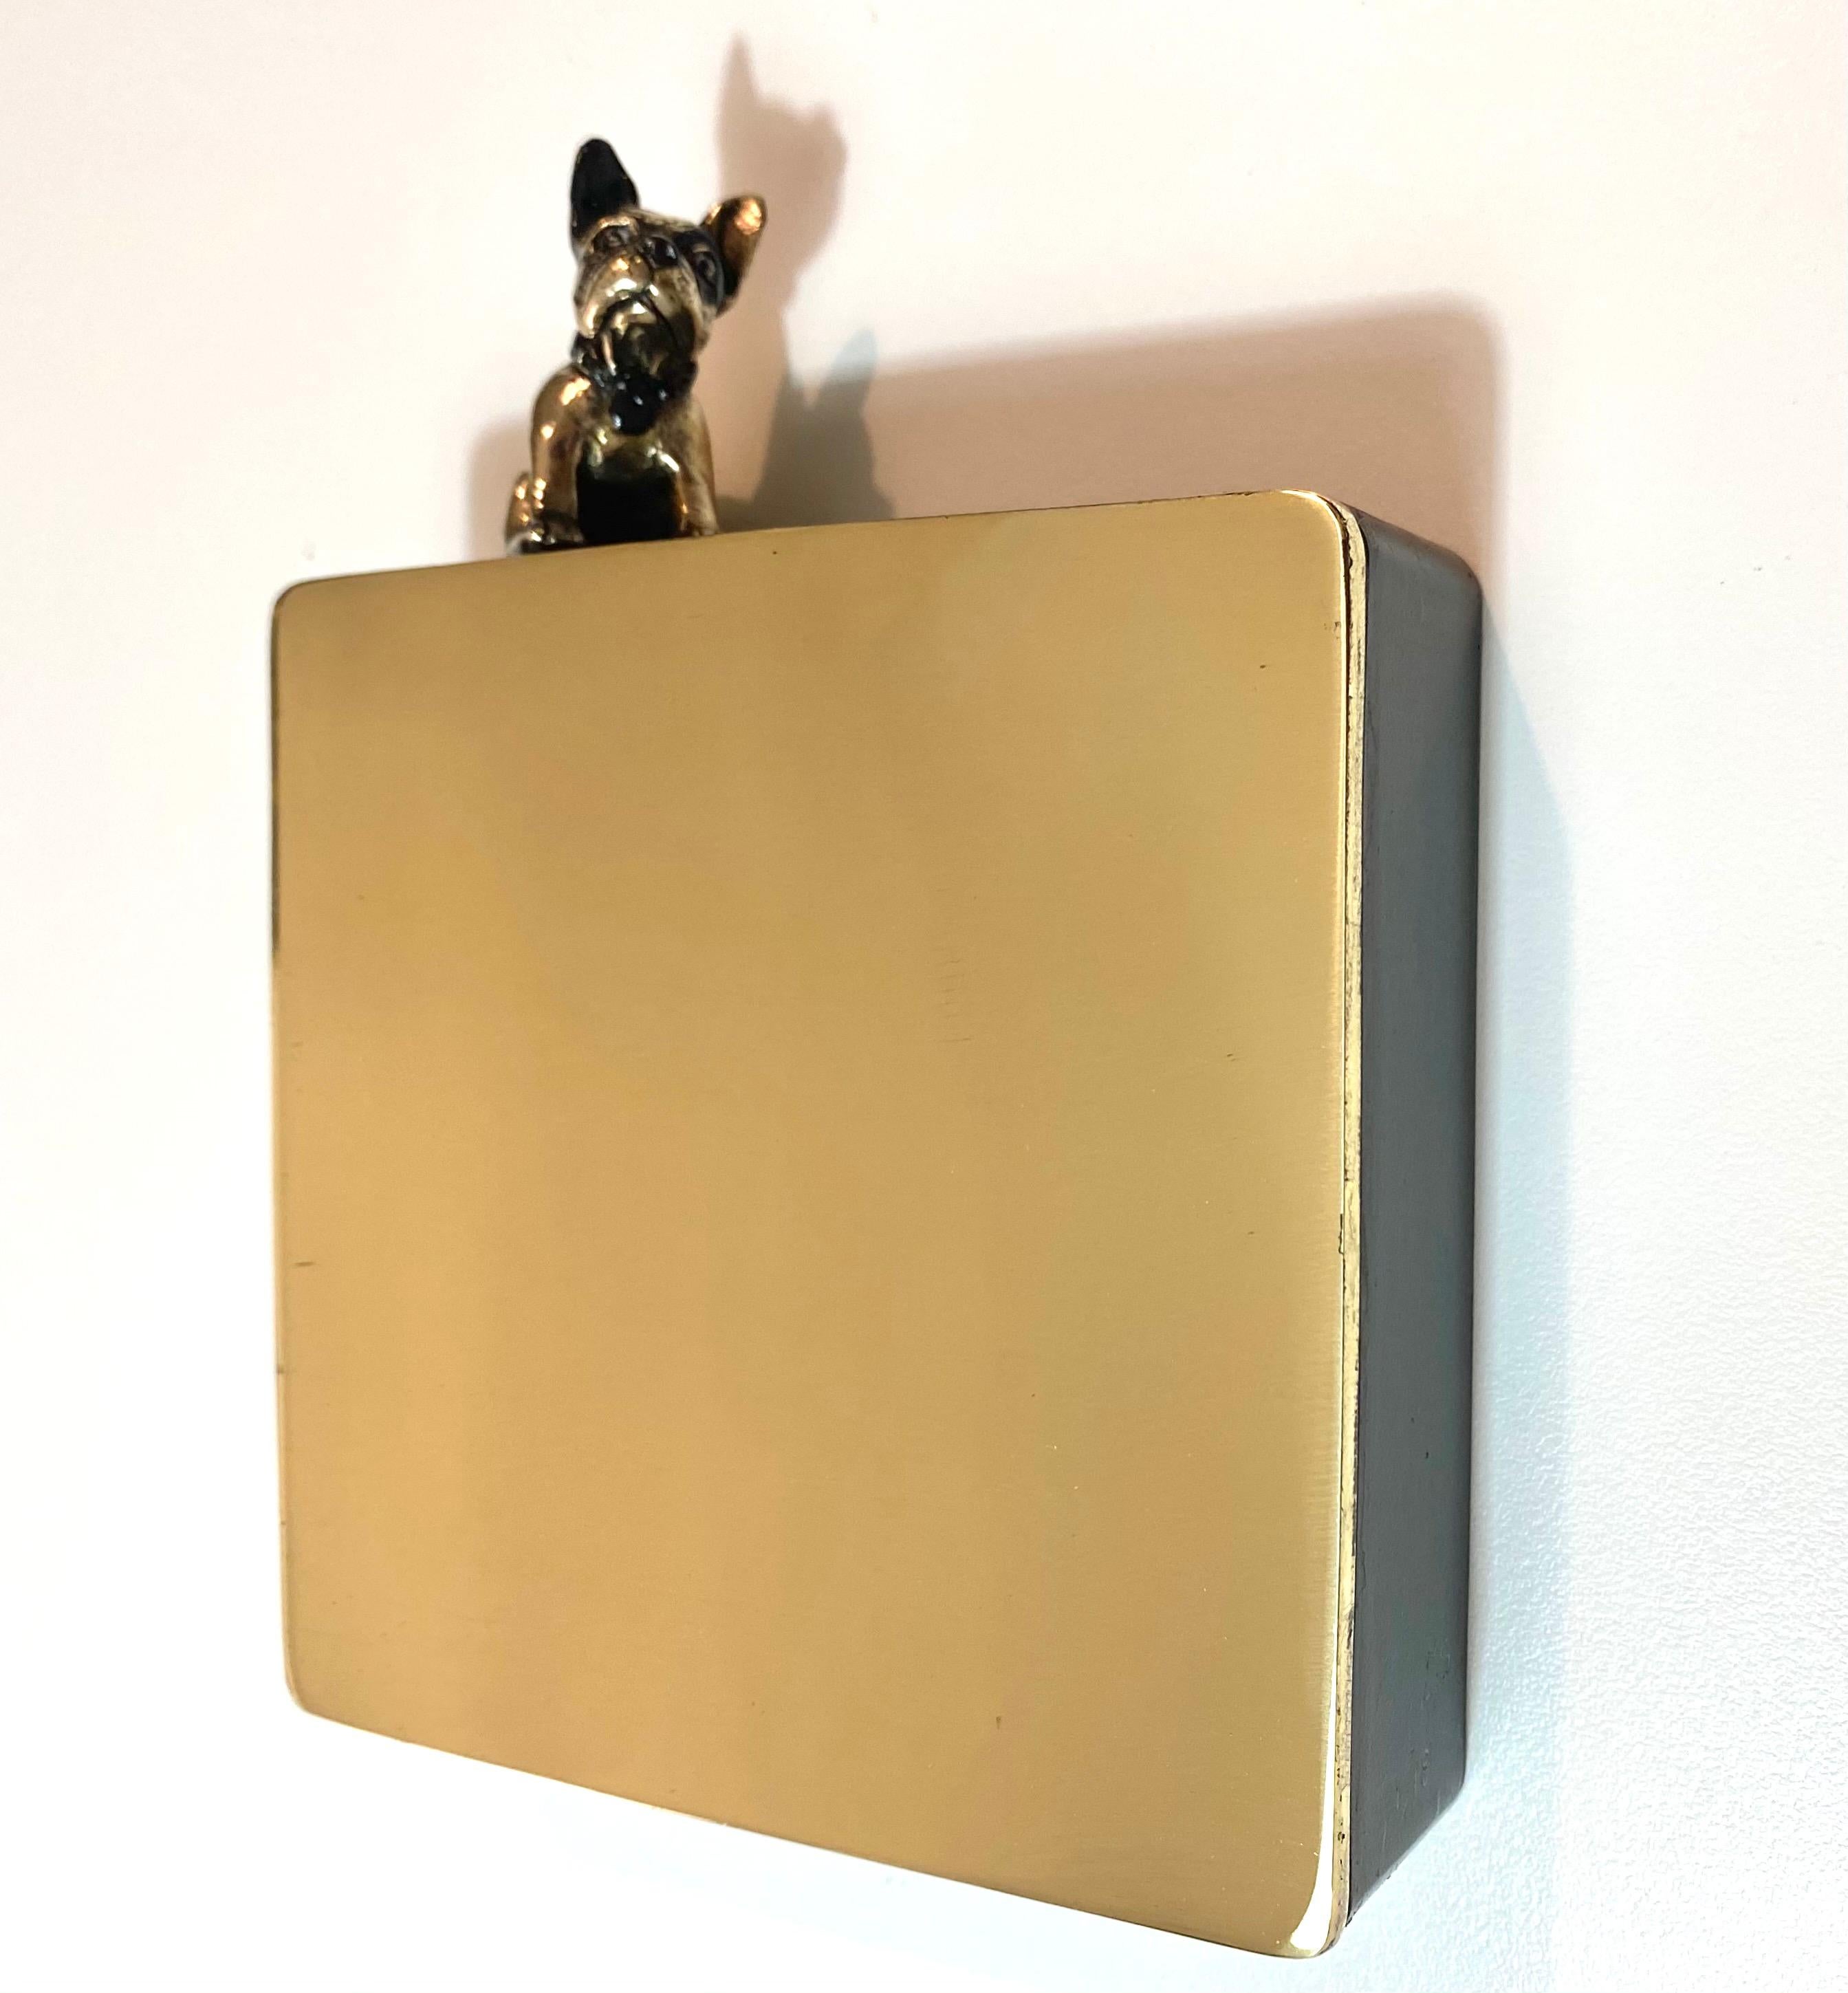 Mr Charmant - bronze mural contemporary small dog sculpture - Gold Figurative Sculpture by Mireia Serra